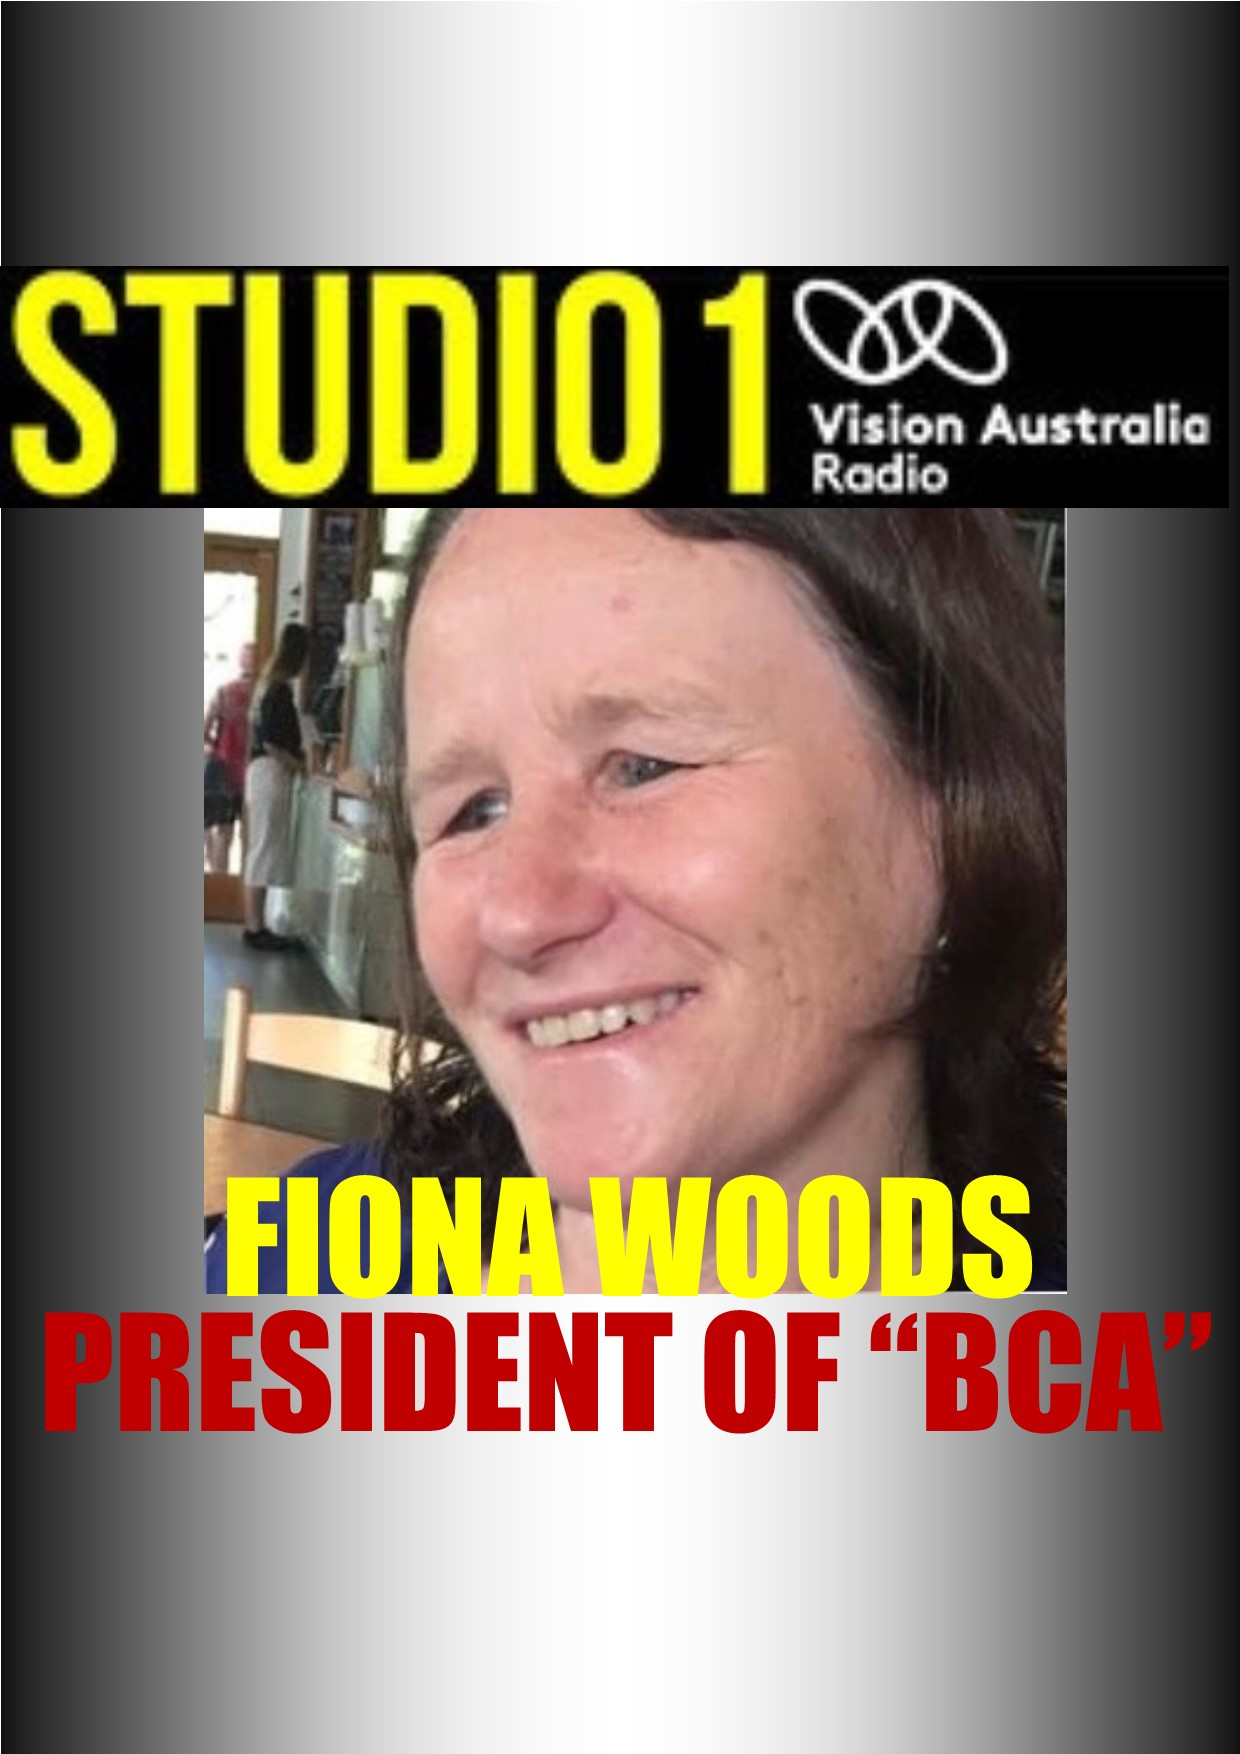 Fiona Woods: President of "BCA"